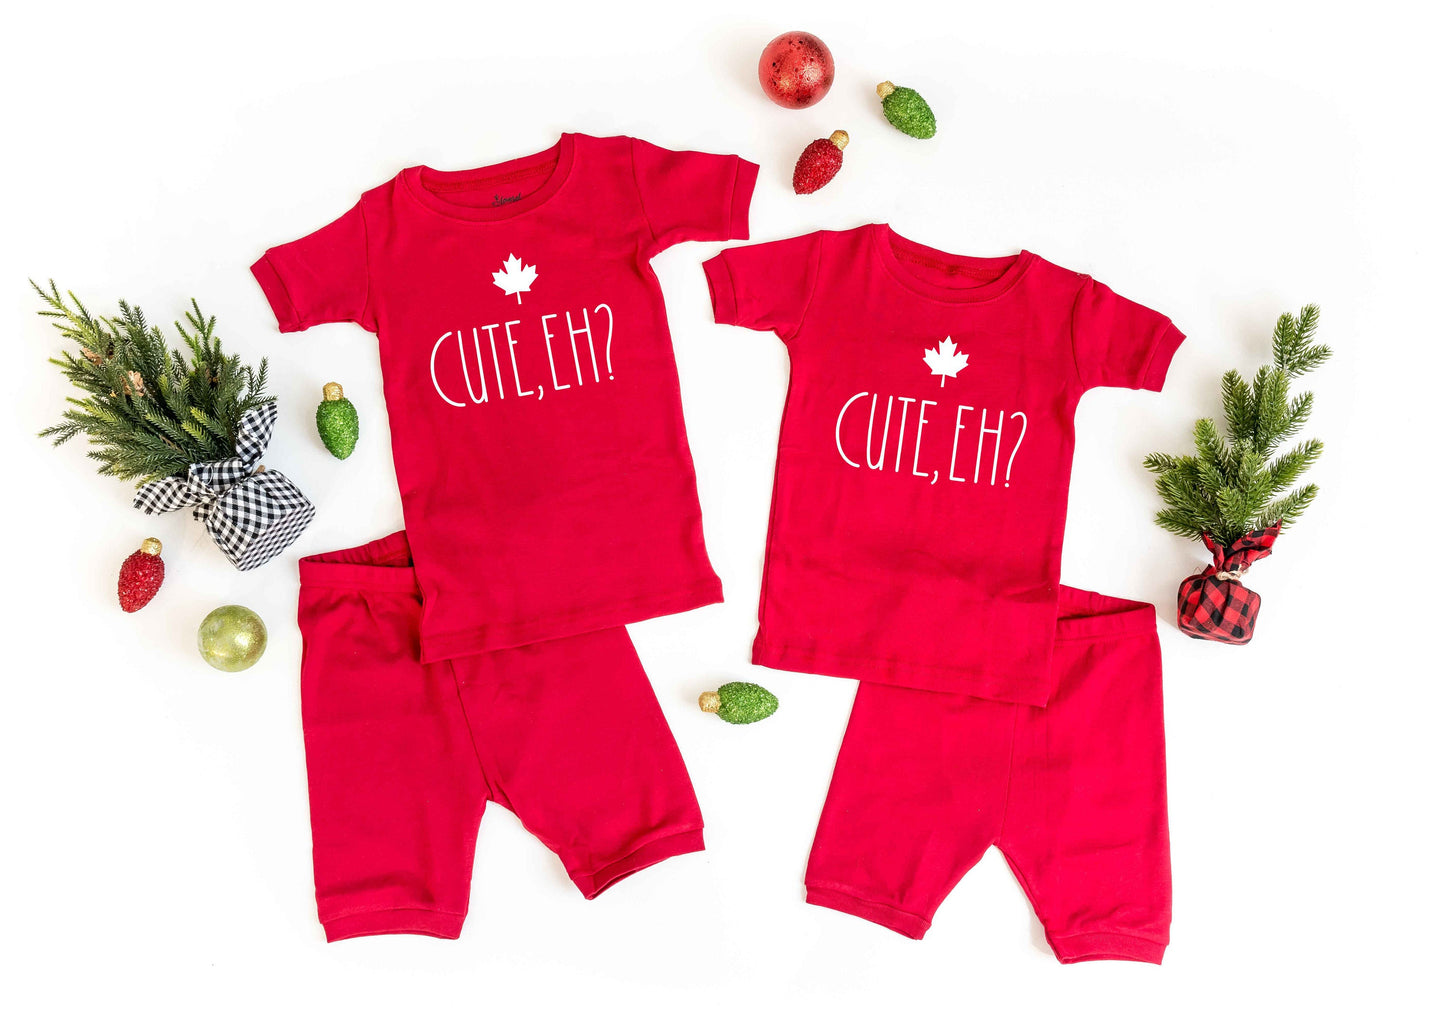 Cute Eh Shorts Toddler and Kids Pajamas - Canadian Pride Pajamas - Canadian Heritage